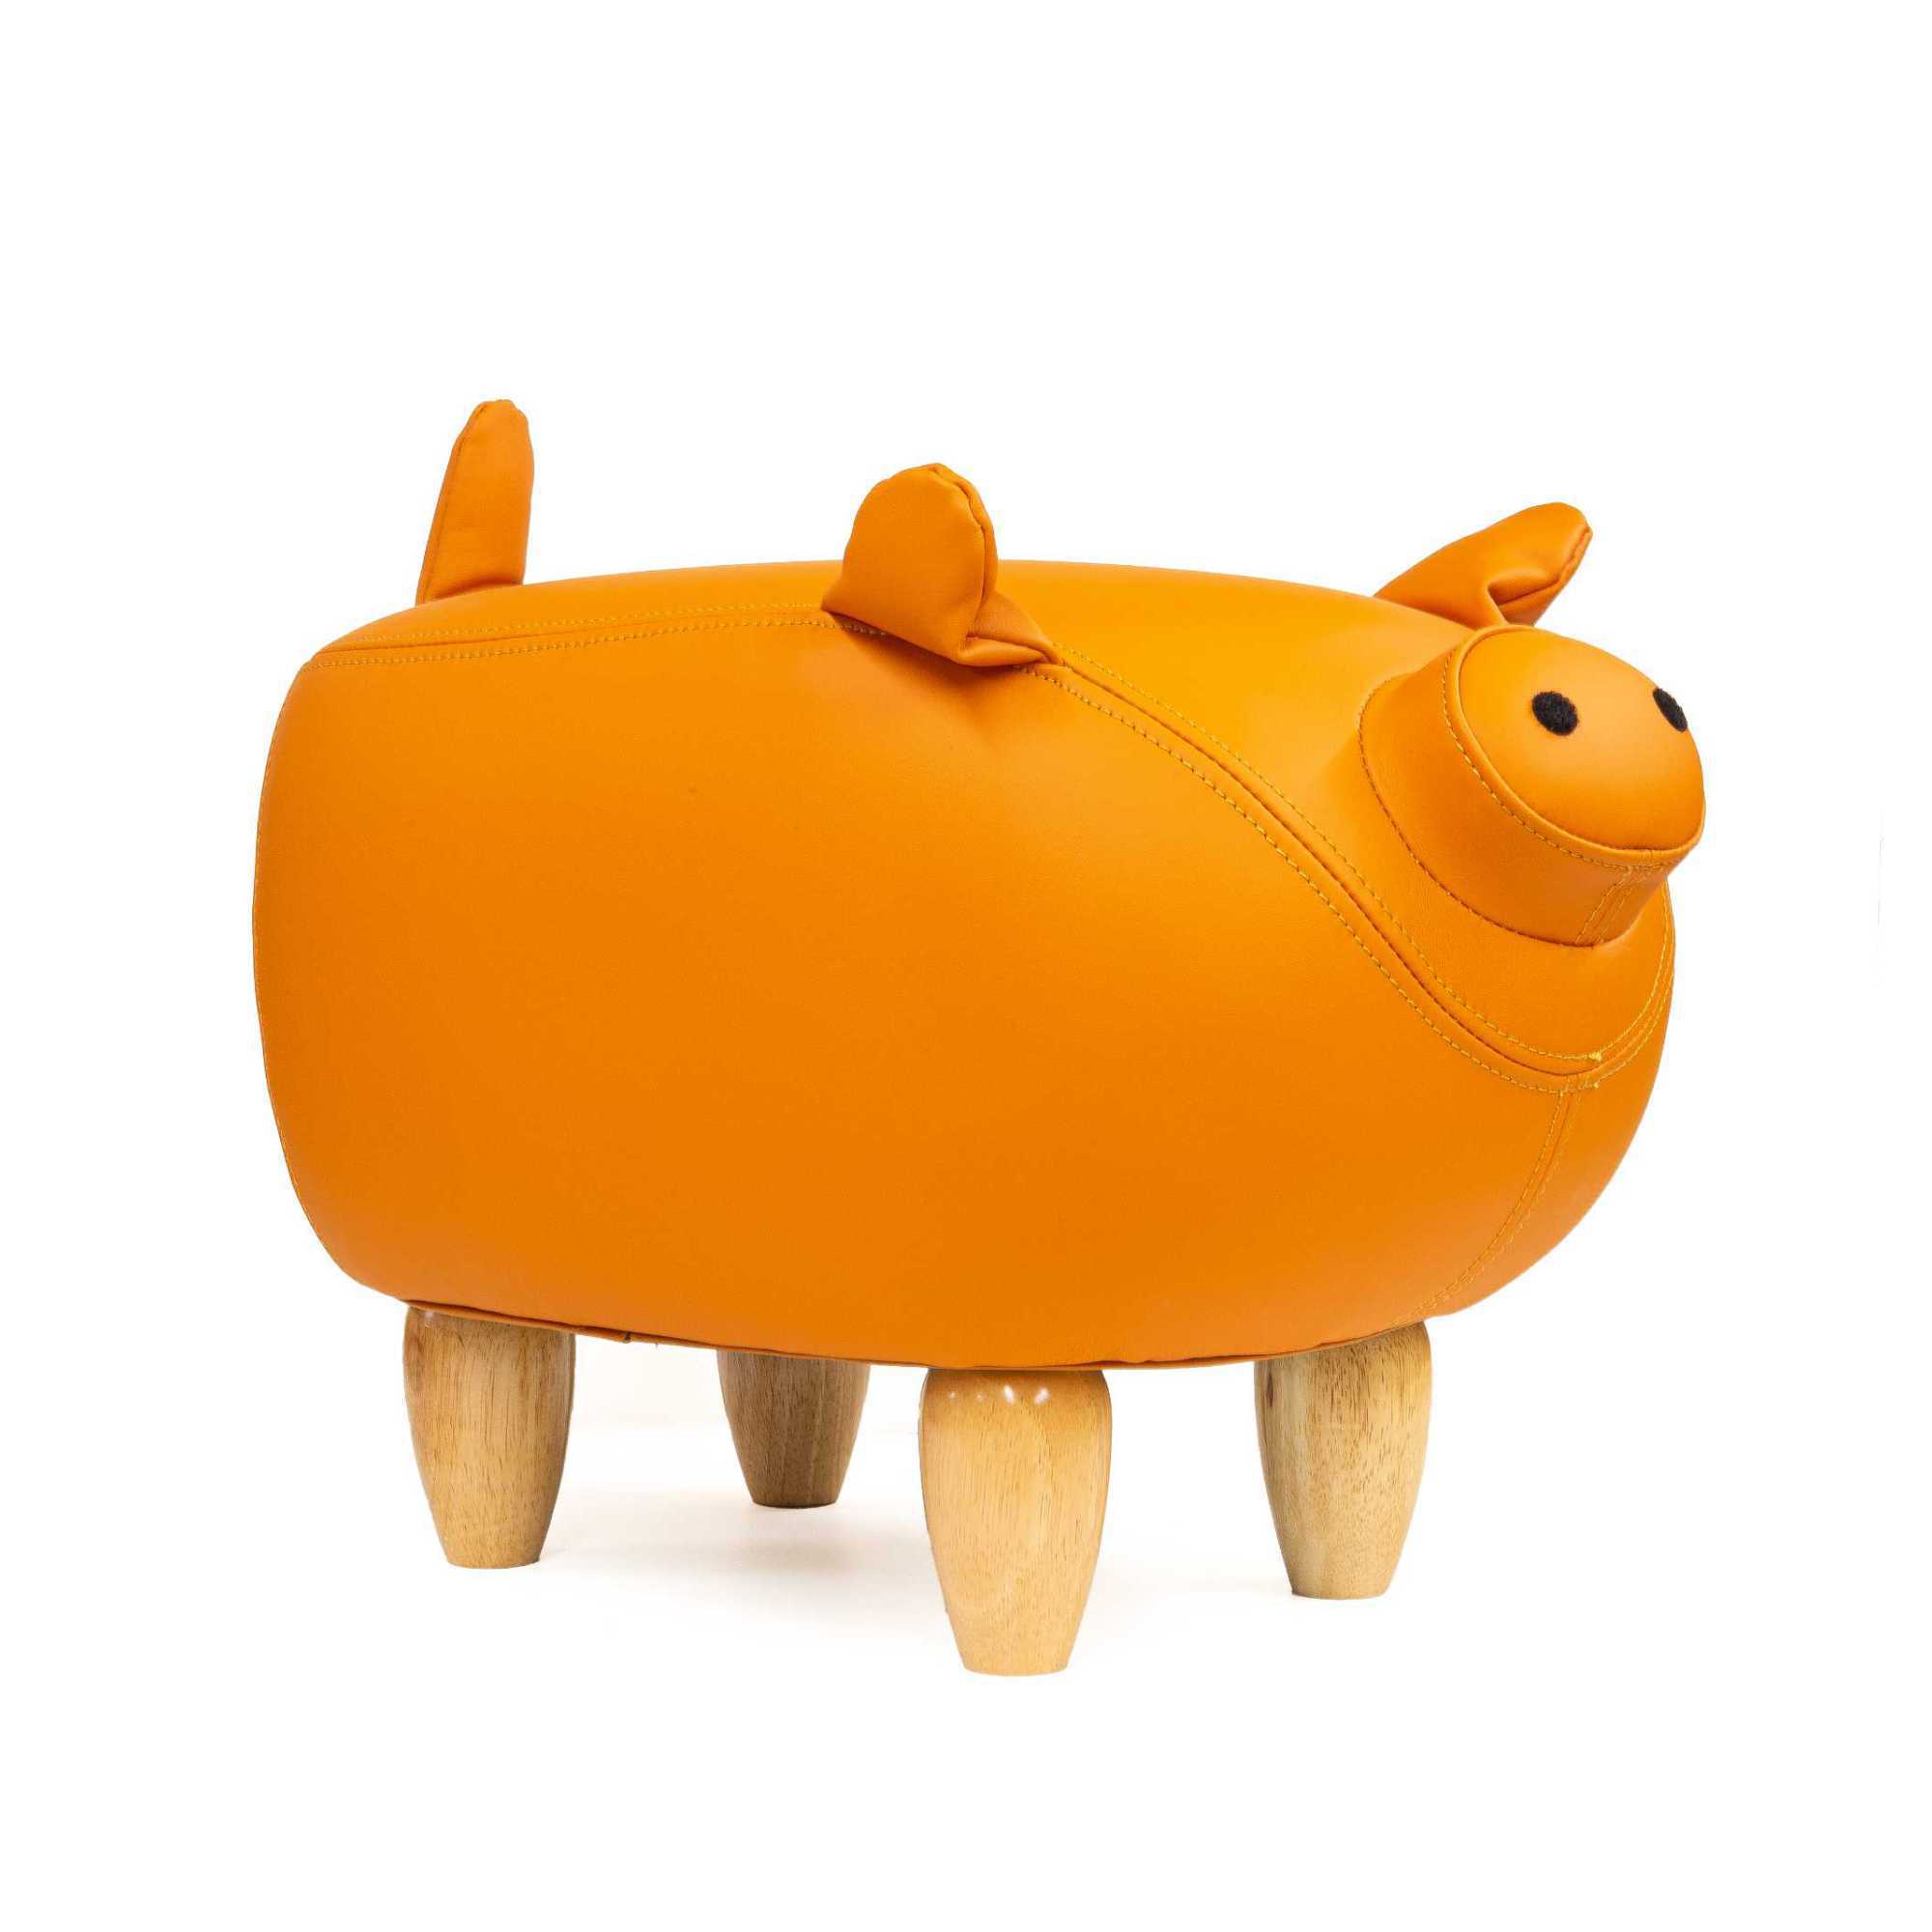 Liberty animal stool, orange pig